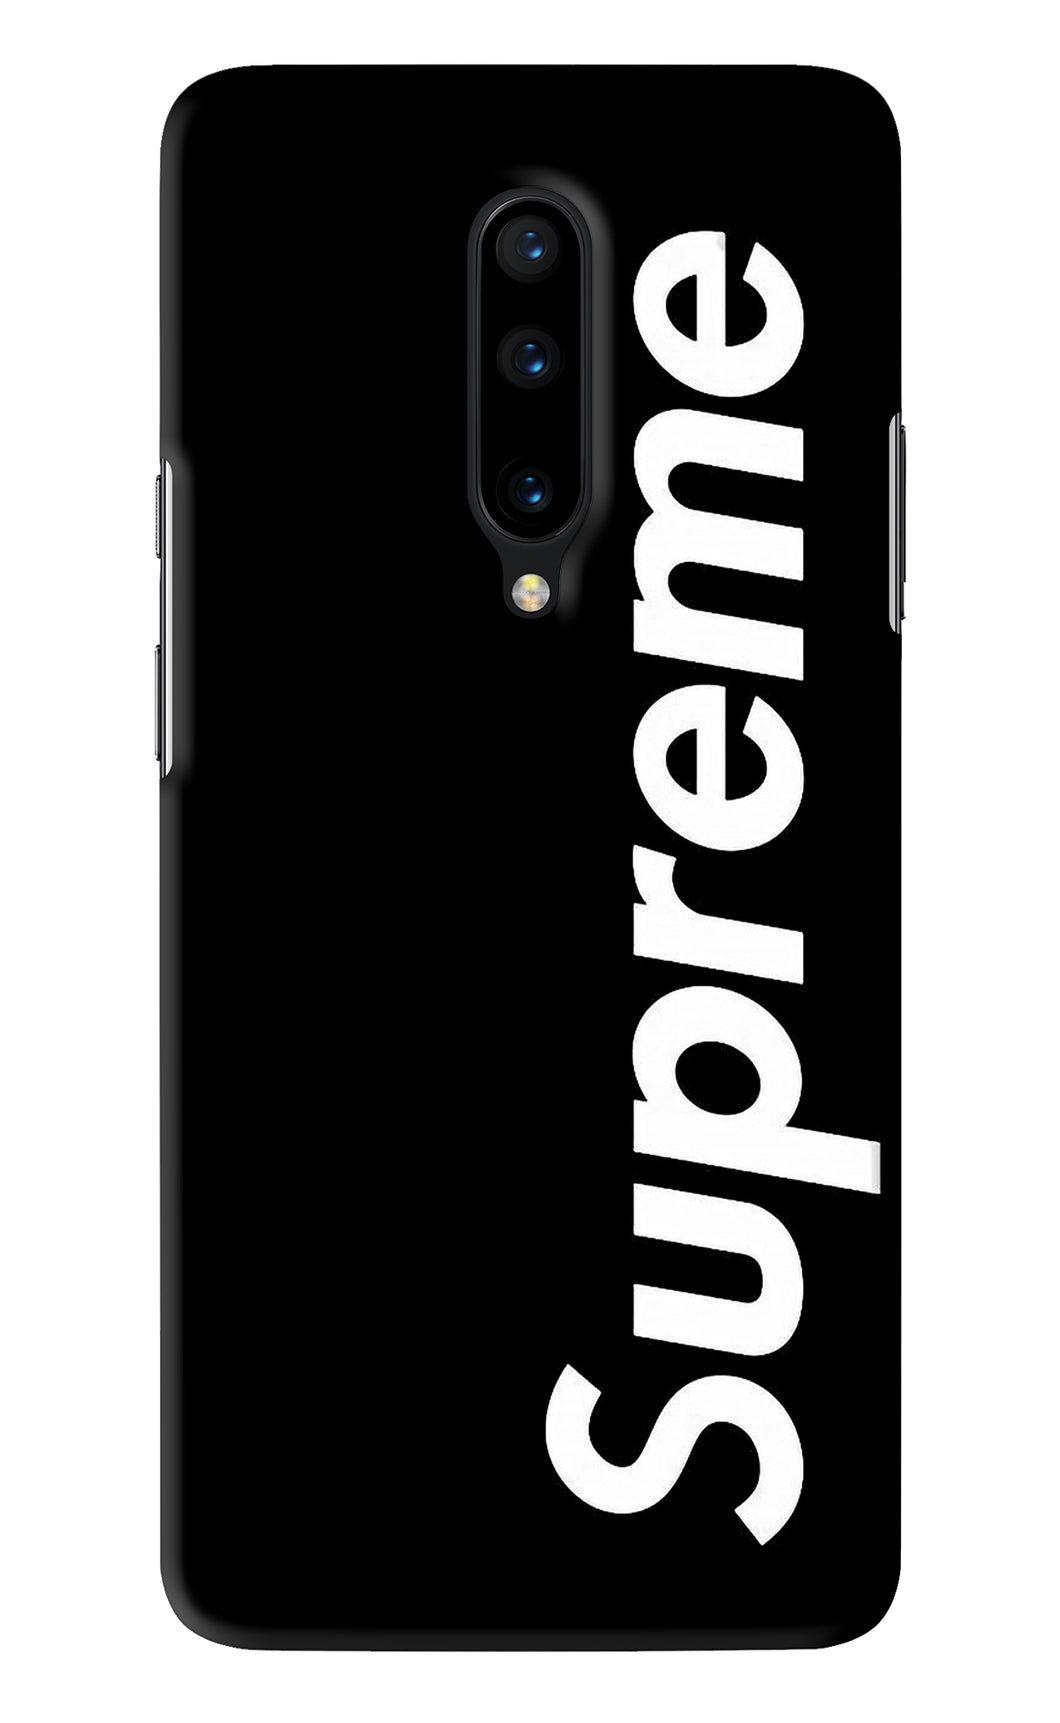 Supreme 1 OnePlus 7 Pro Back Skin Wrap